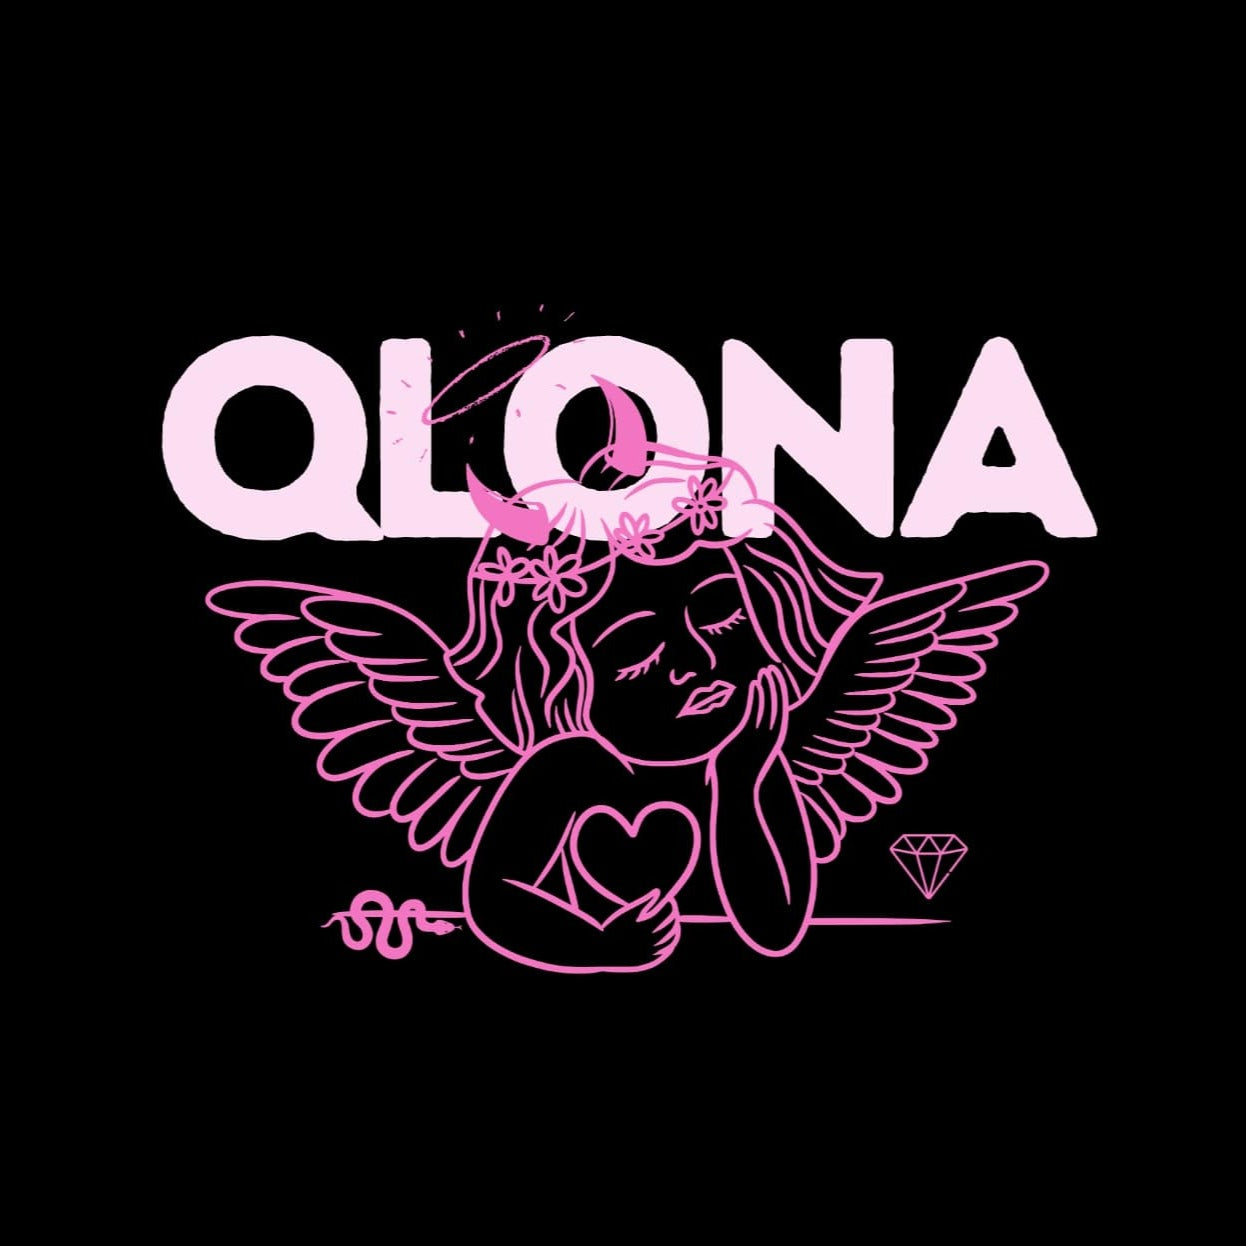 QLONA (Women)